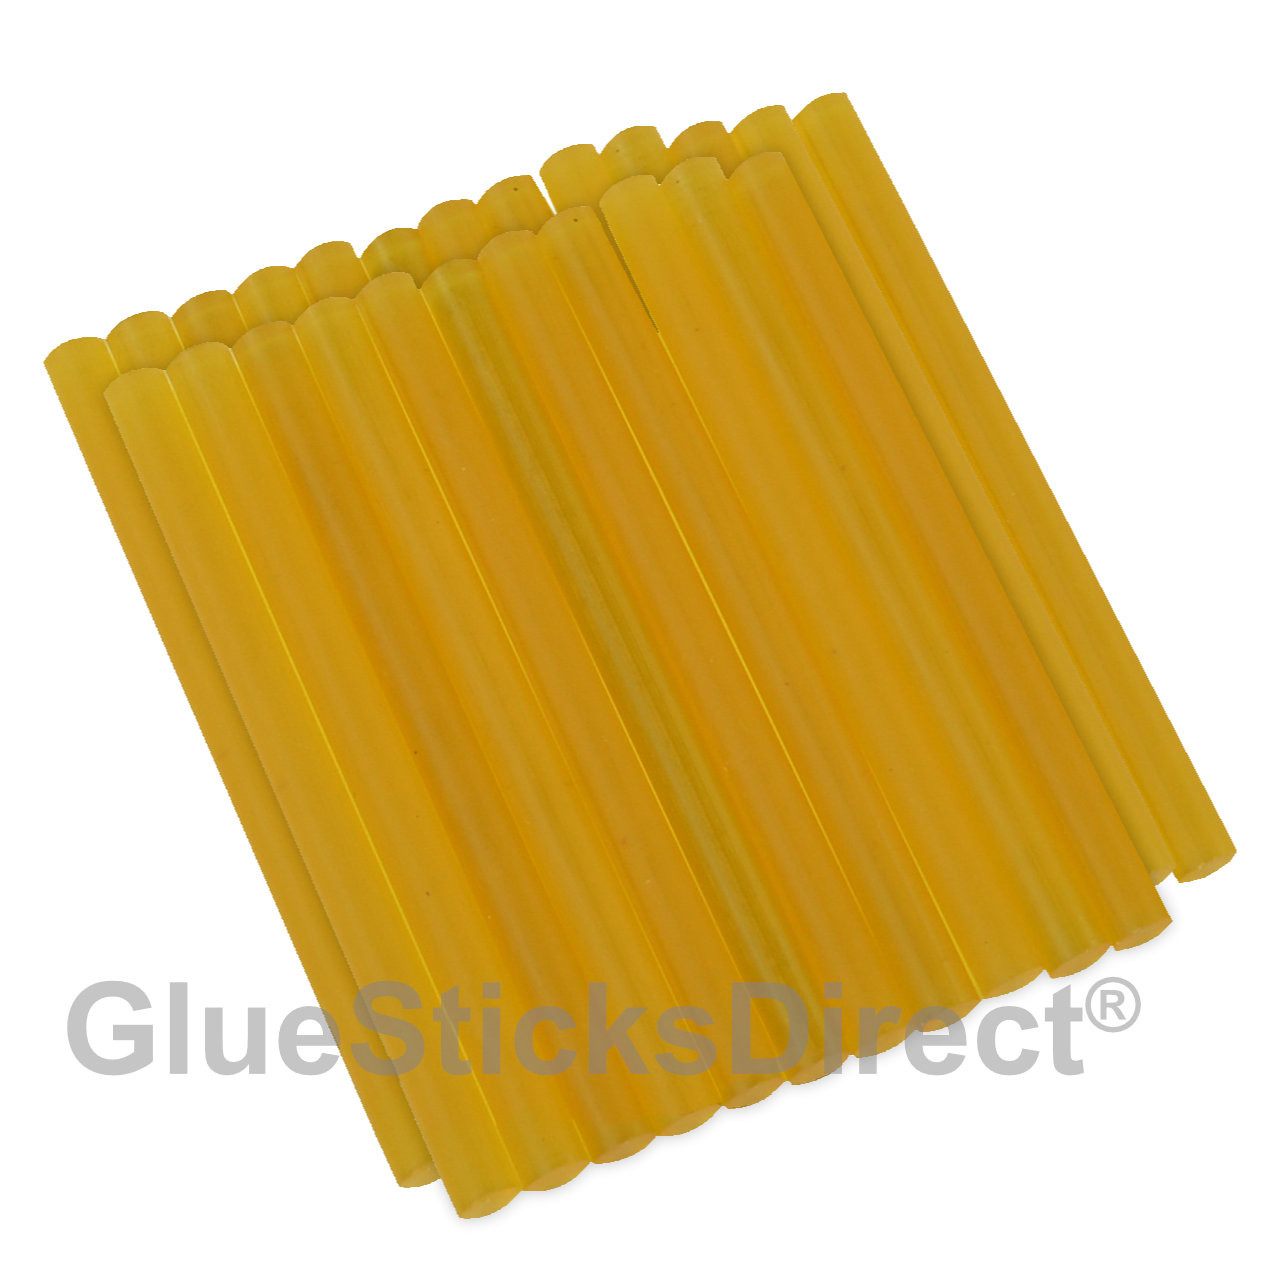 GlueSticksDirect® Clear Hair Fusion Glue Sticks Mini X 4" 24 Sticks